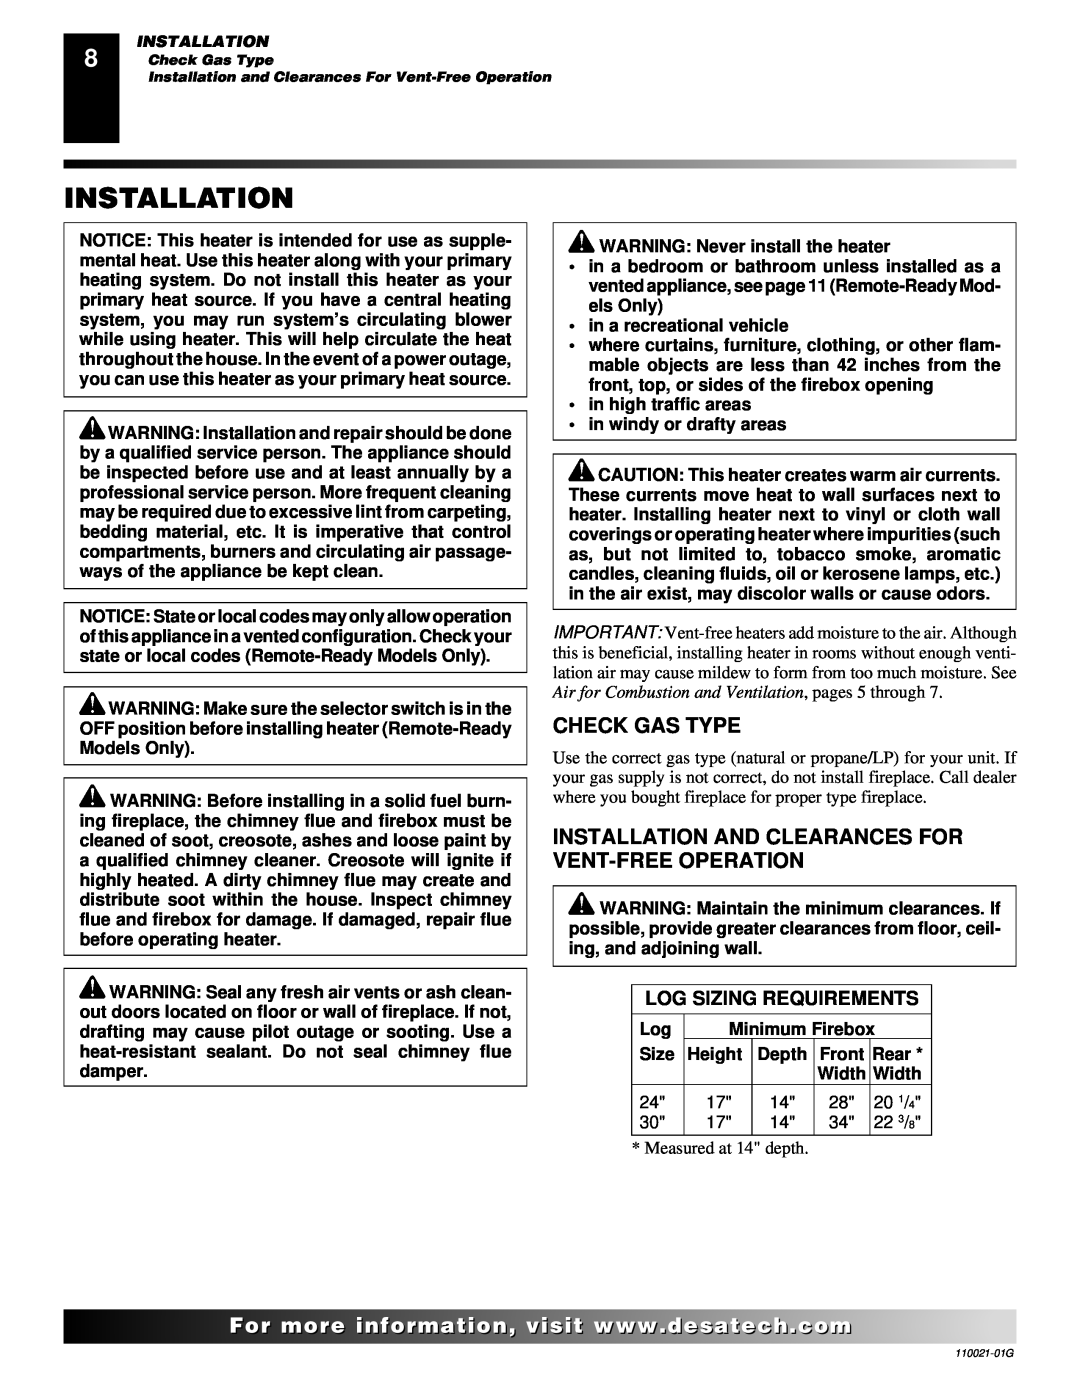 Desa CSG3930PR, CSG3930NR installation manual Installation, Check Gas Type, Log Sizing Requirements 